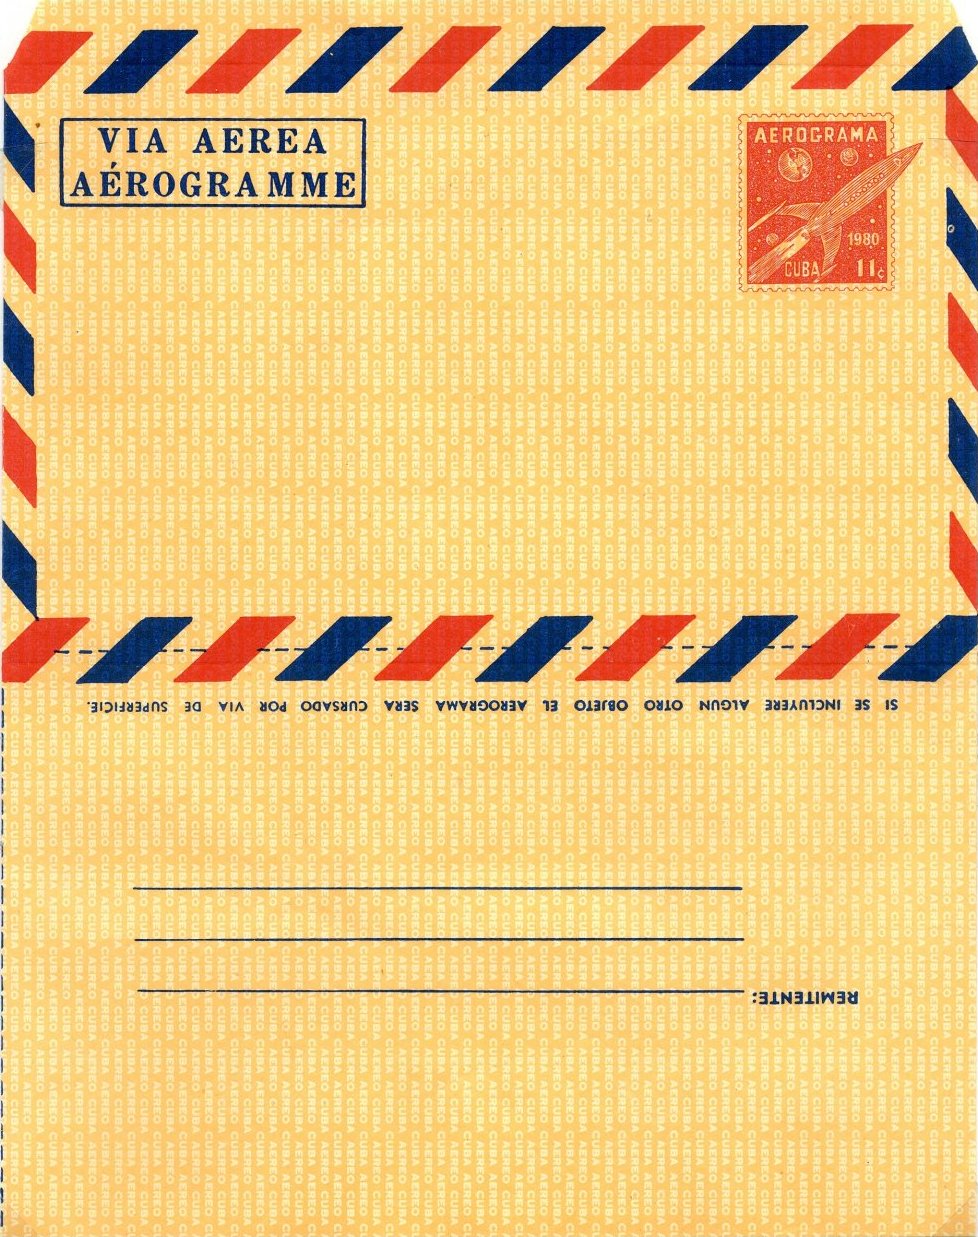 Edifil 6 Aerogram - 1980 Version